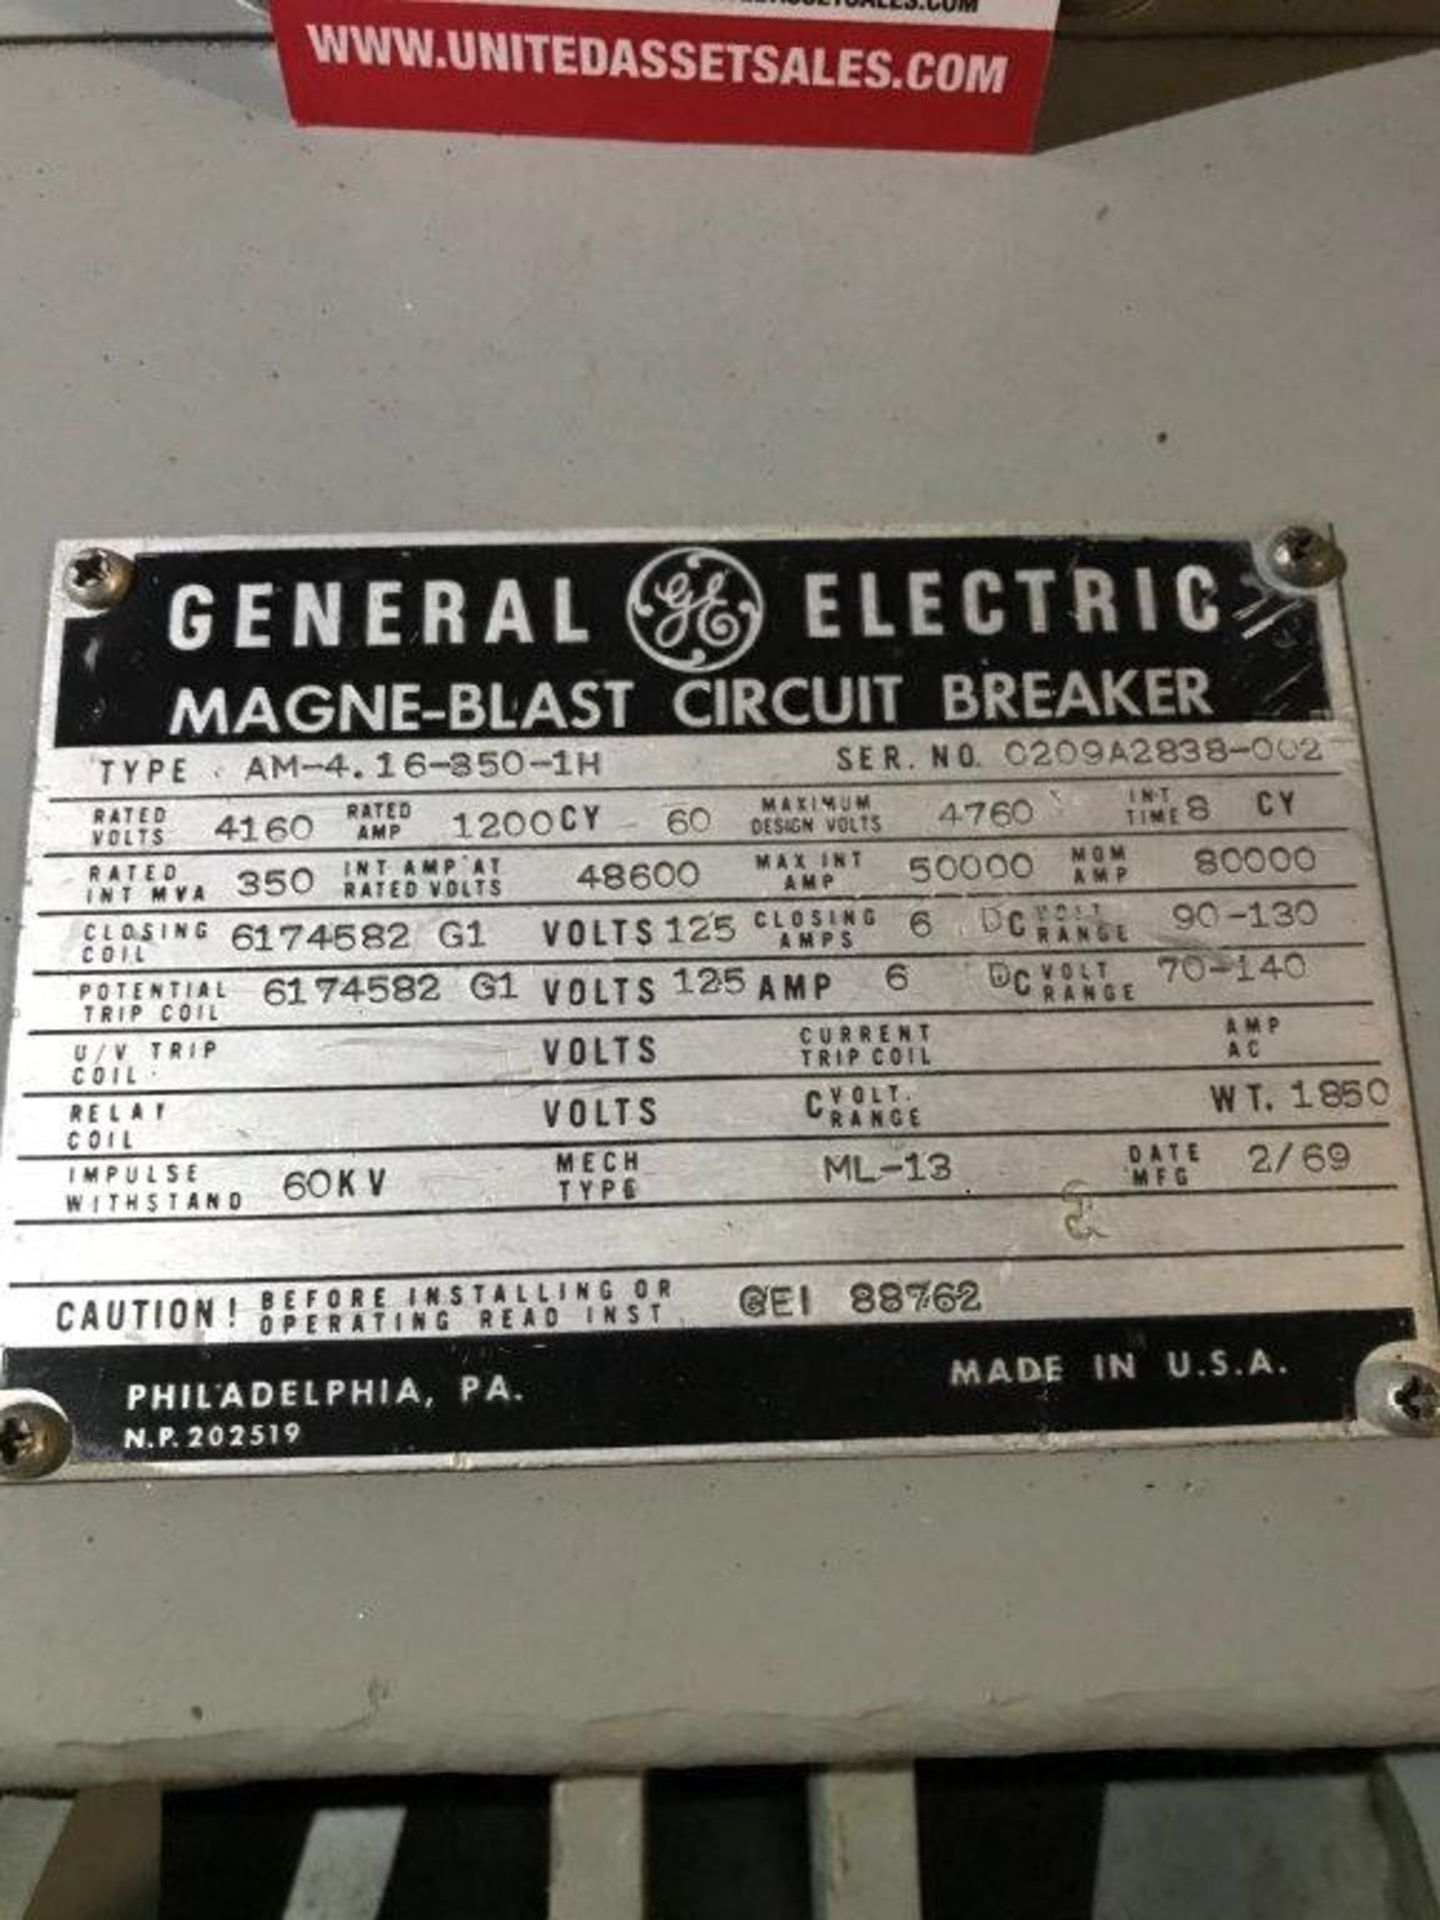 GENERAL ELECTRIC MANGE-BLAST CIRCUIT BREAKER, TYPE AM-4.16-350-1H, 4160 VOLT, 1200 AMP (LOCATION: - Image 2 of 2